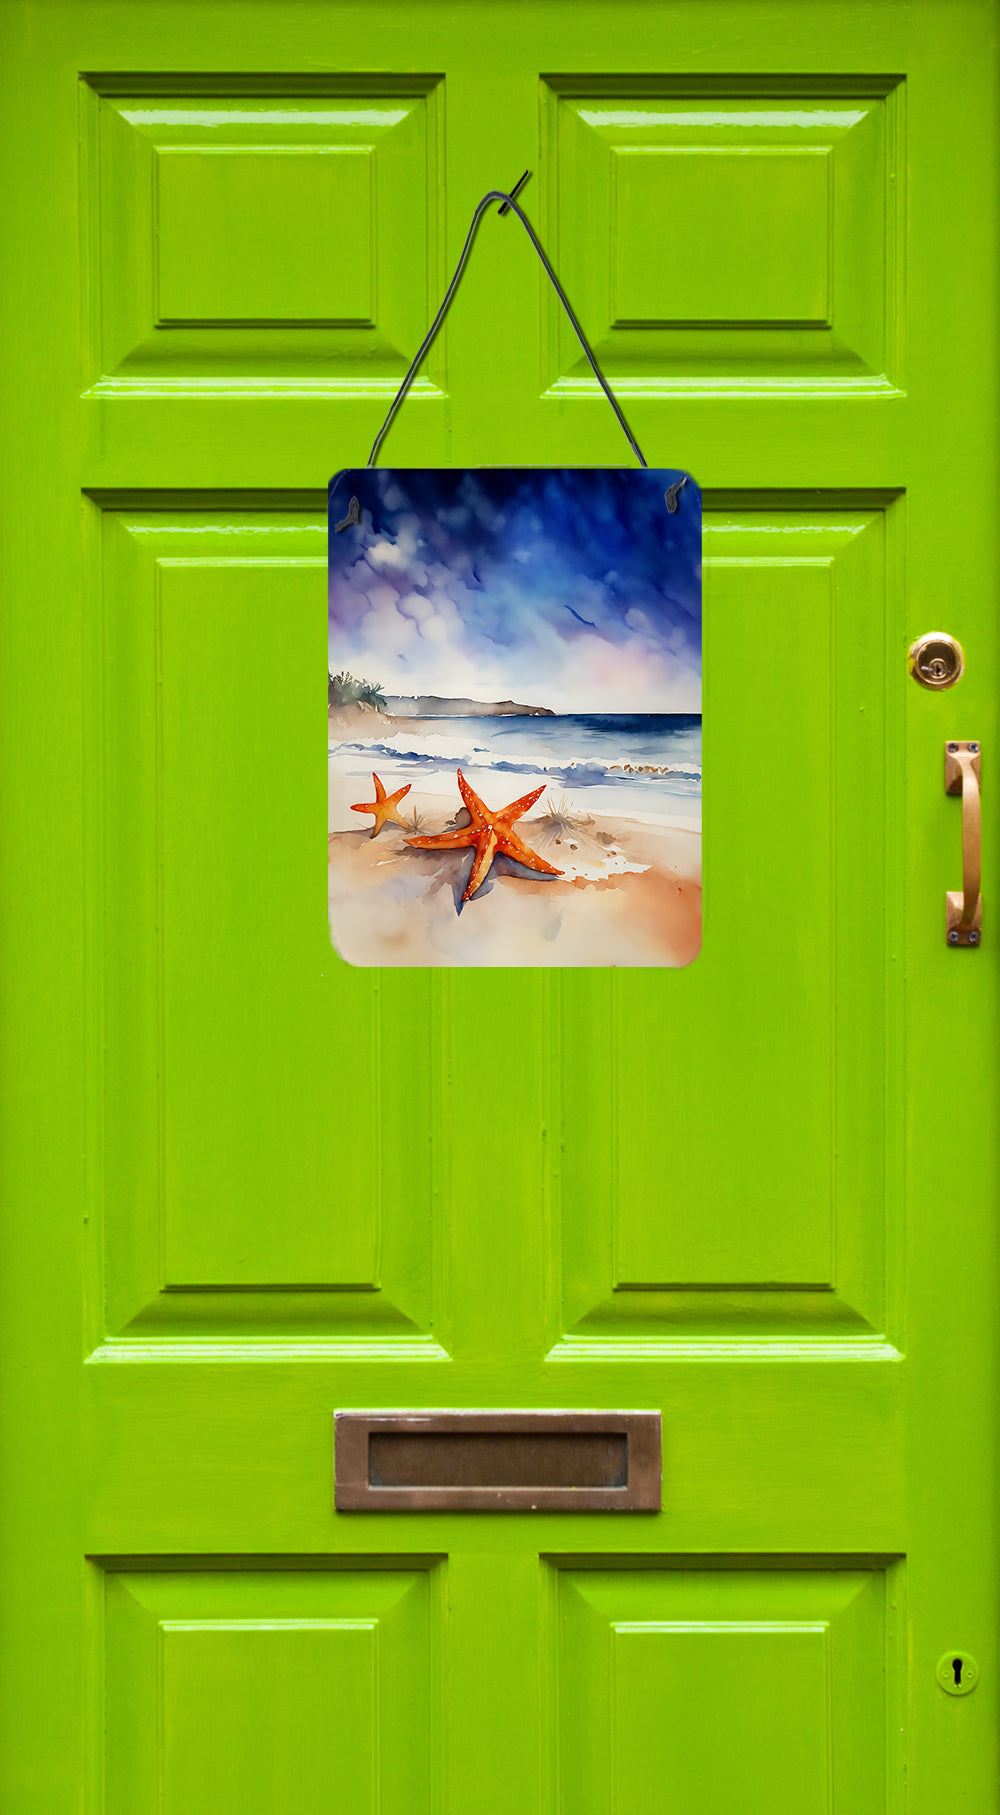 Buy this Starfish Wall or Door Hanging Prints